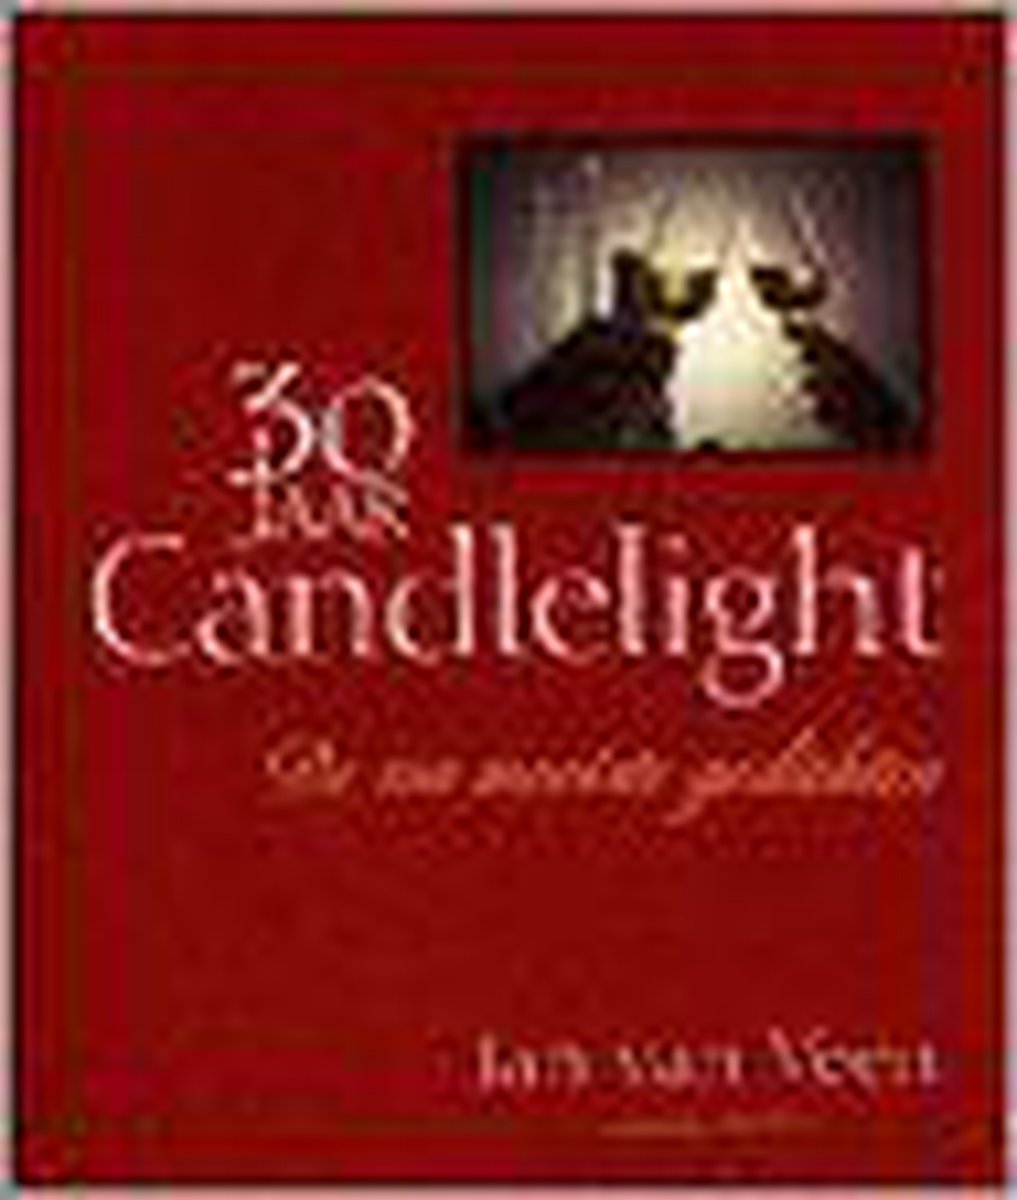 30 Jaar Candlelight